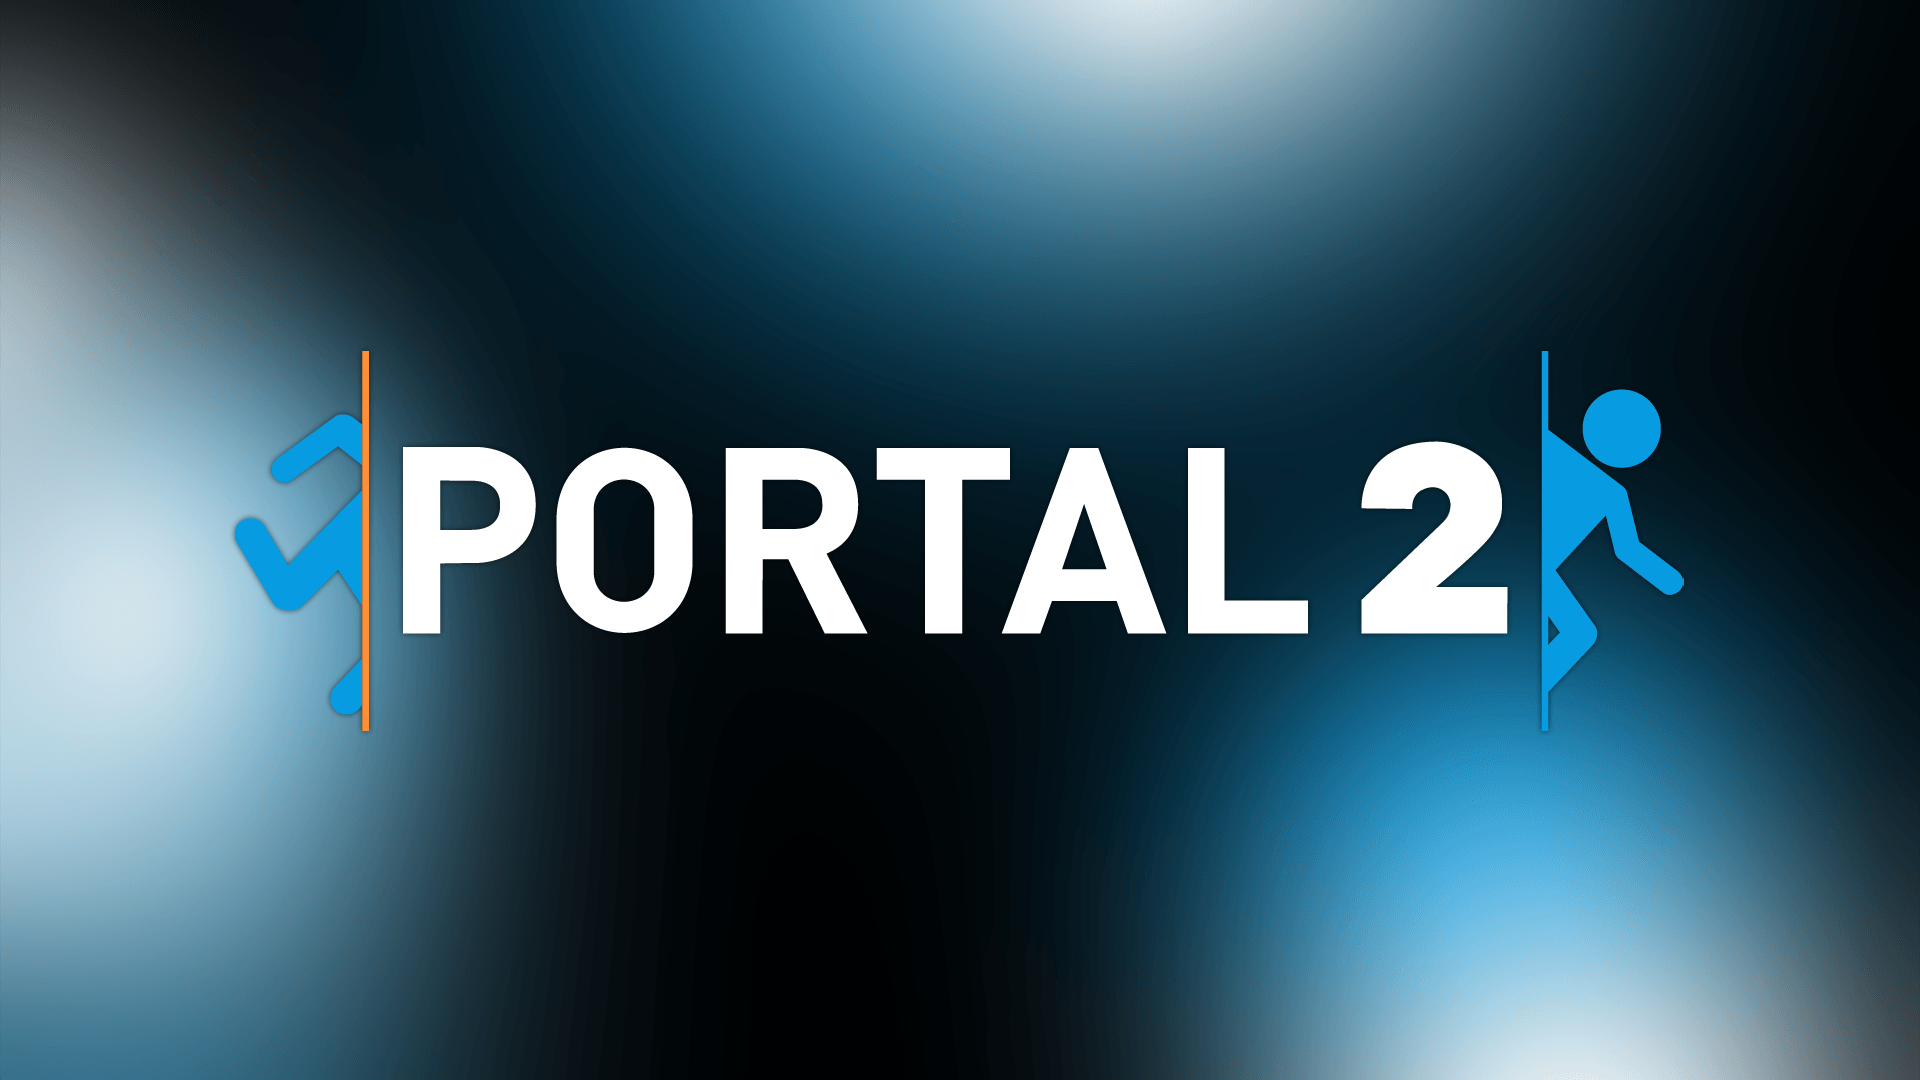 Portal 2 Wallpaper, TJA97 HD Wallpaper For Desktop And Mobile